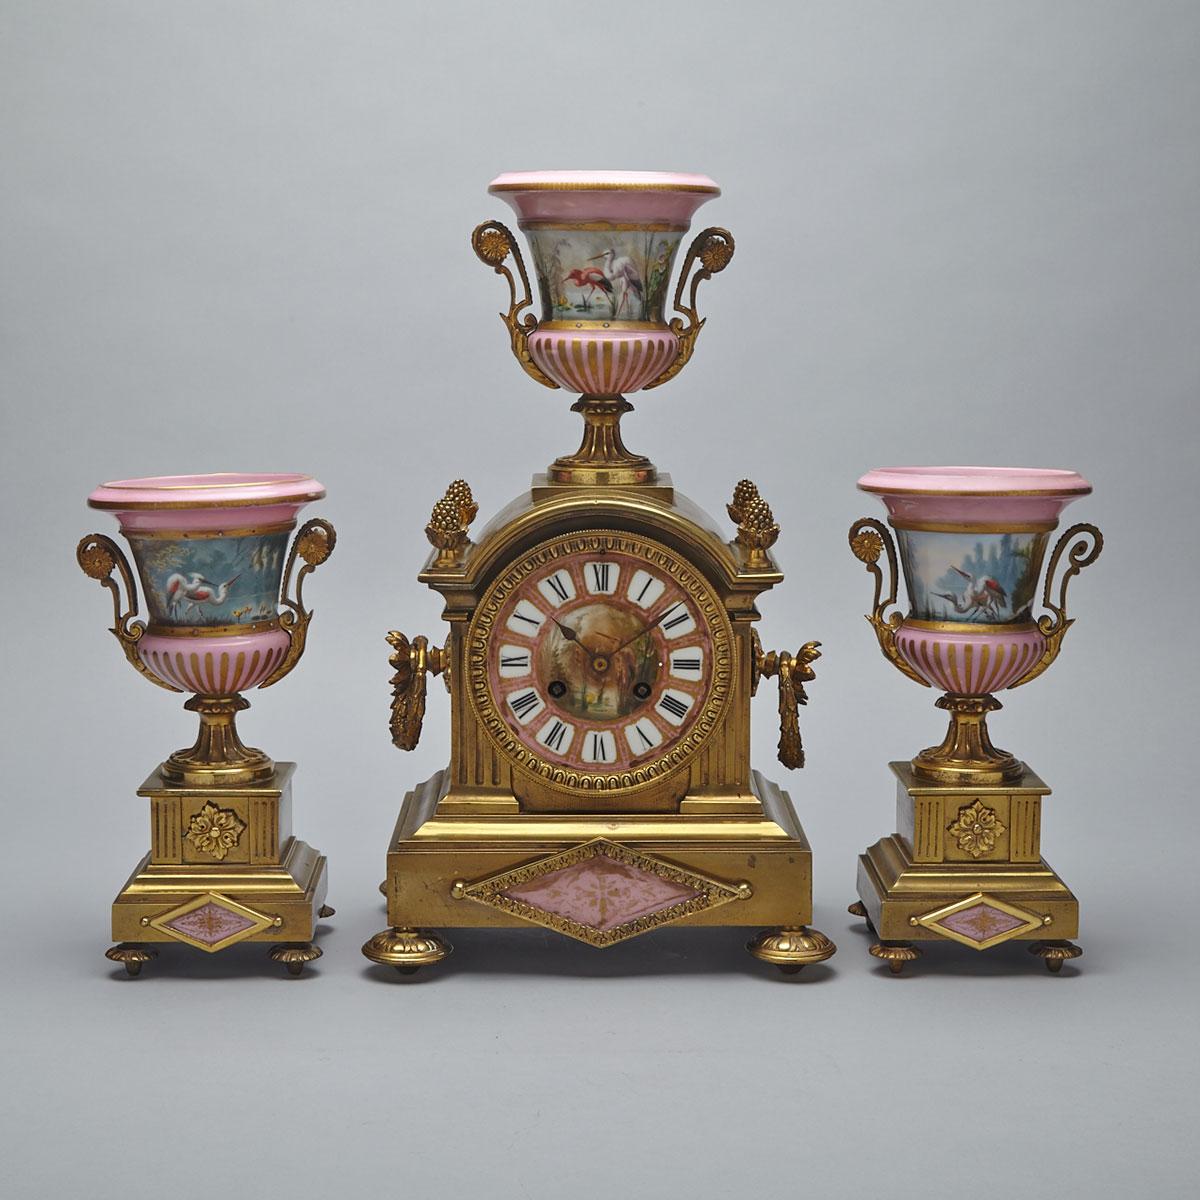 Three Piece French Sevres Style Porcelain Gilt Bronze Mantel Clock Garniture, 2nd half, 19th century